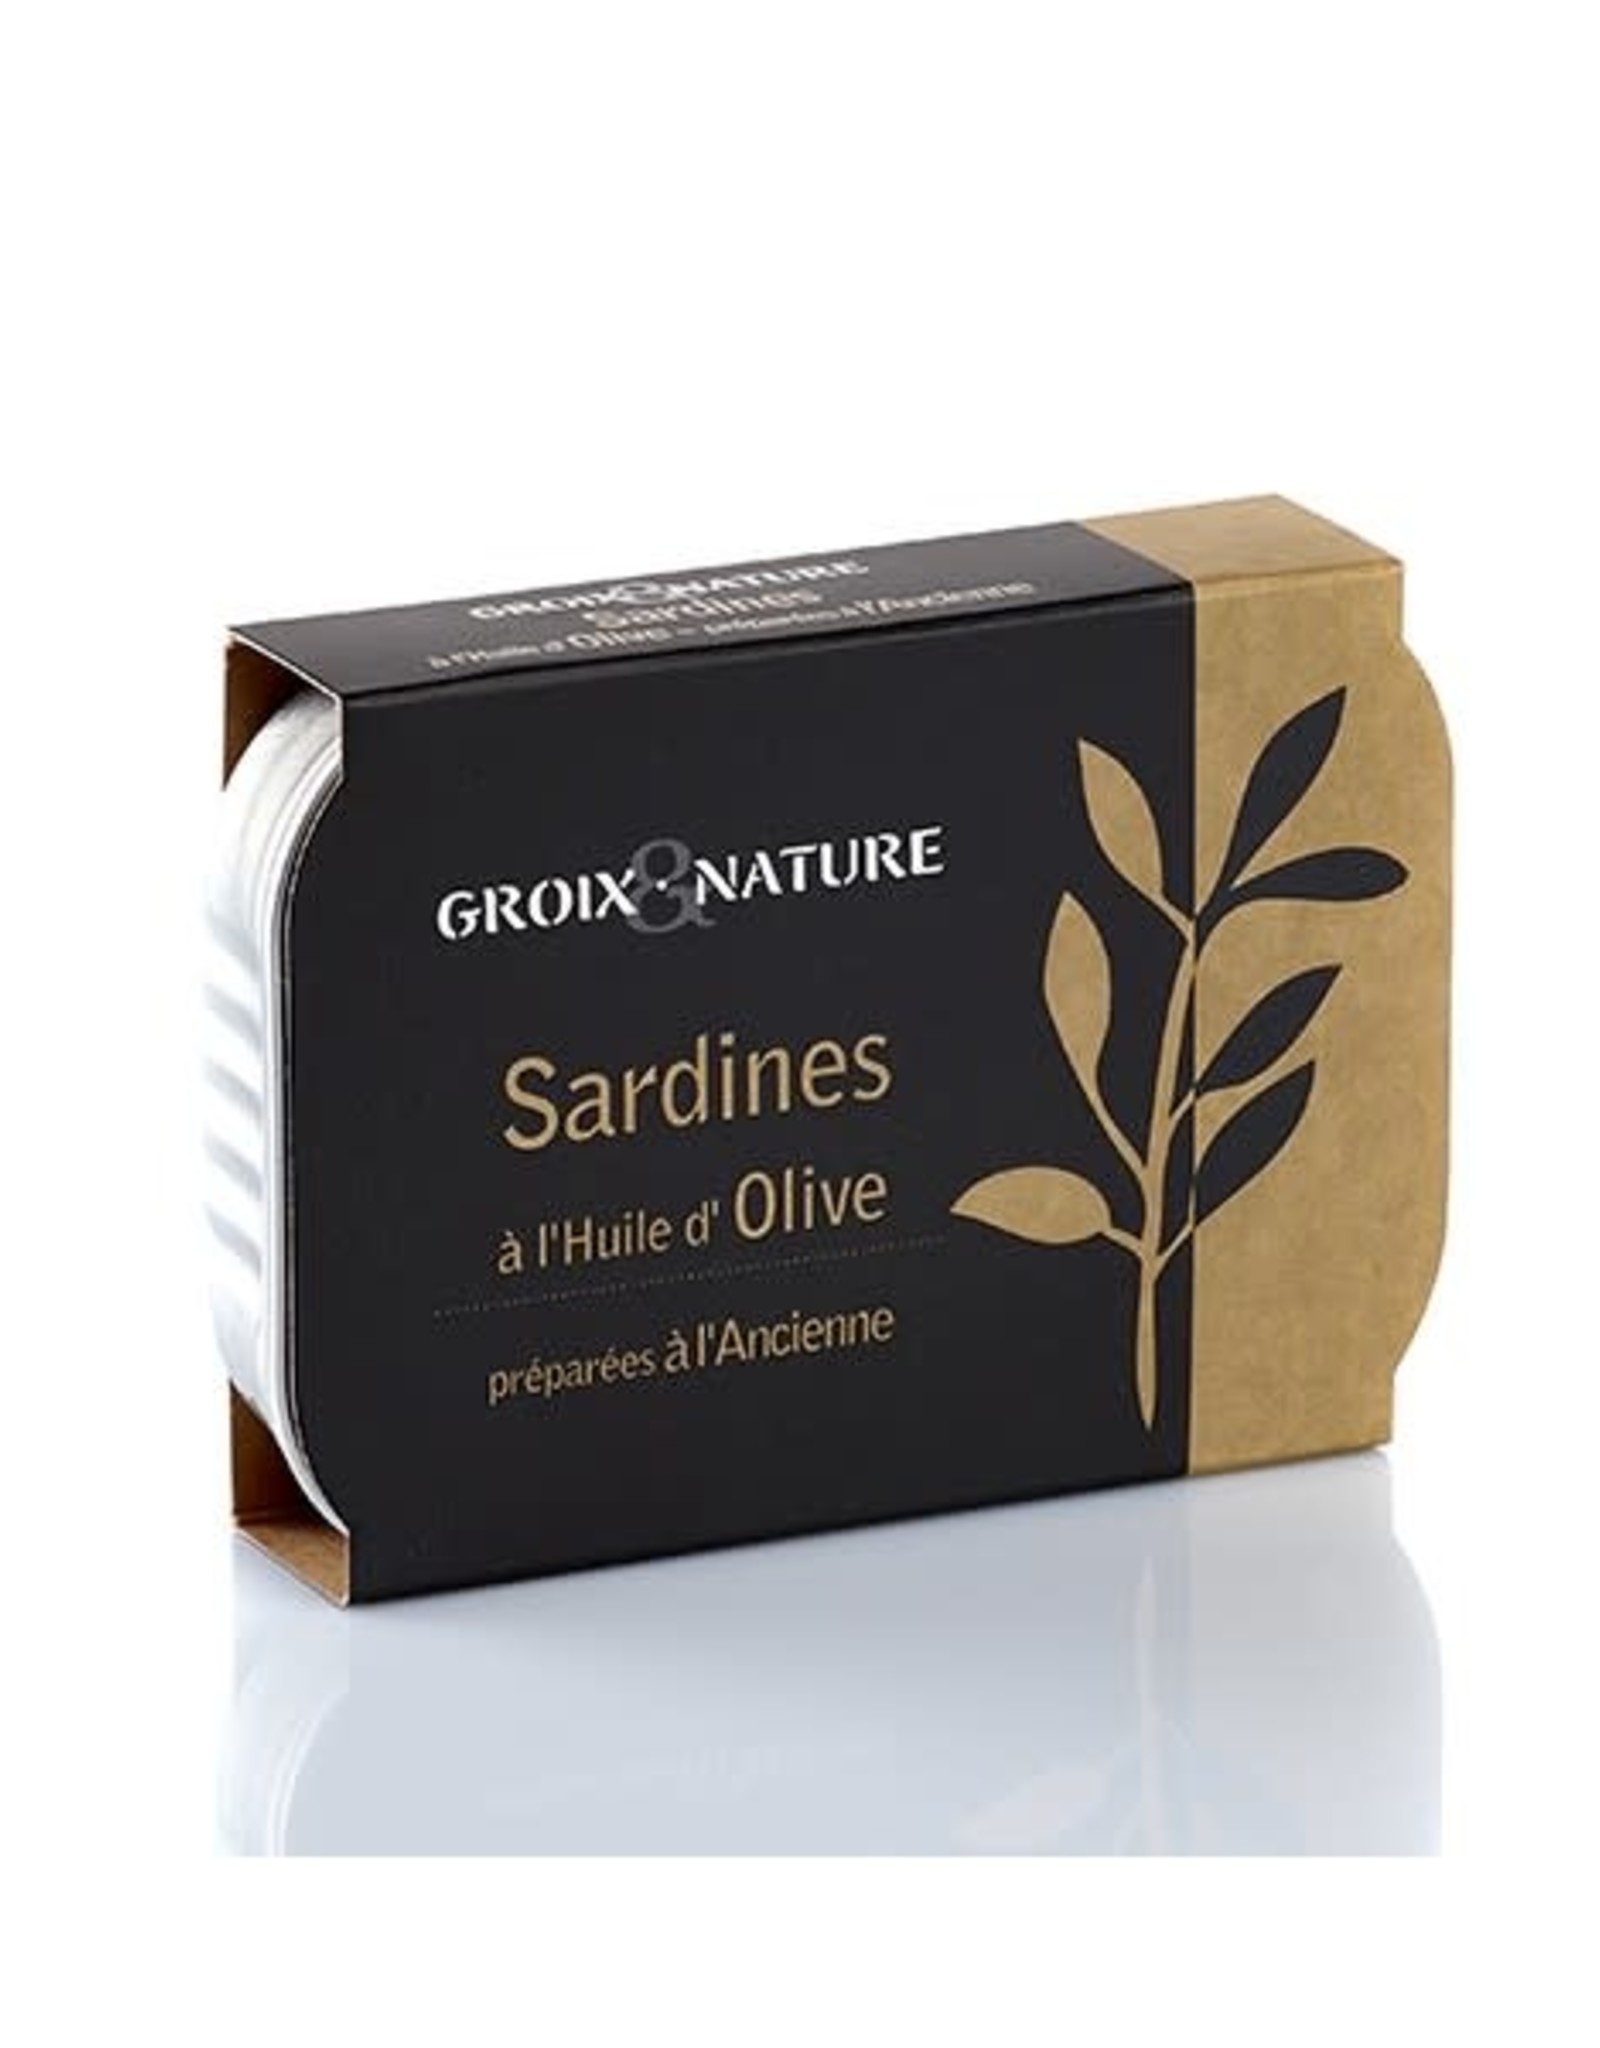 Groix Nature Sardines in Olive Oil